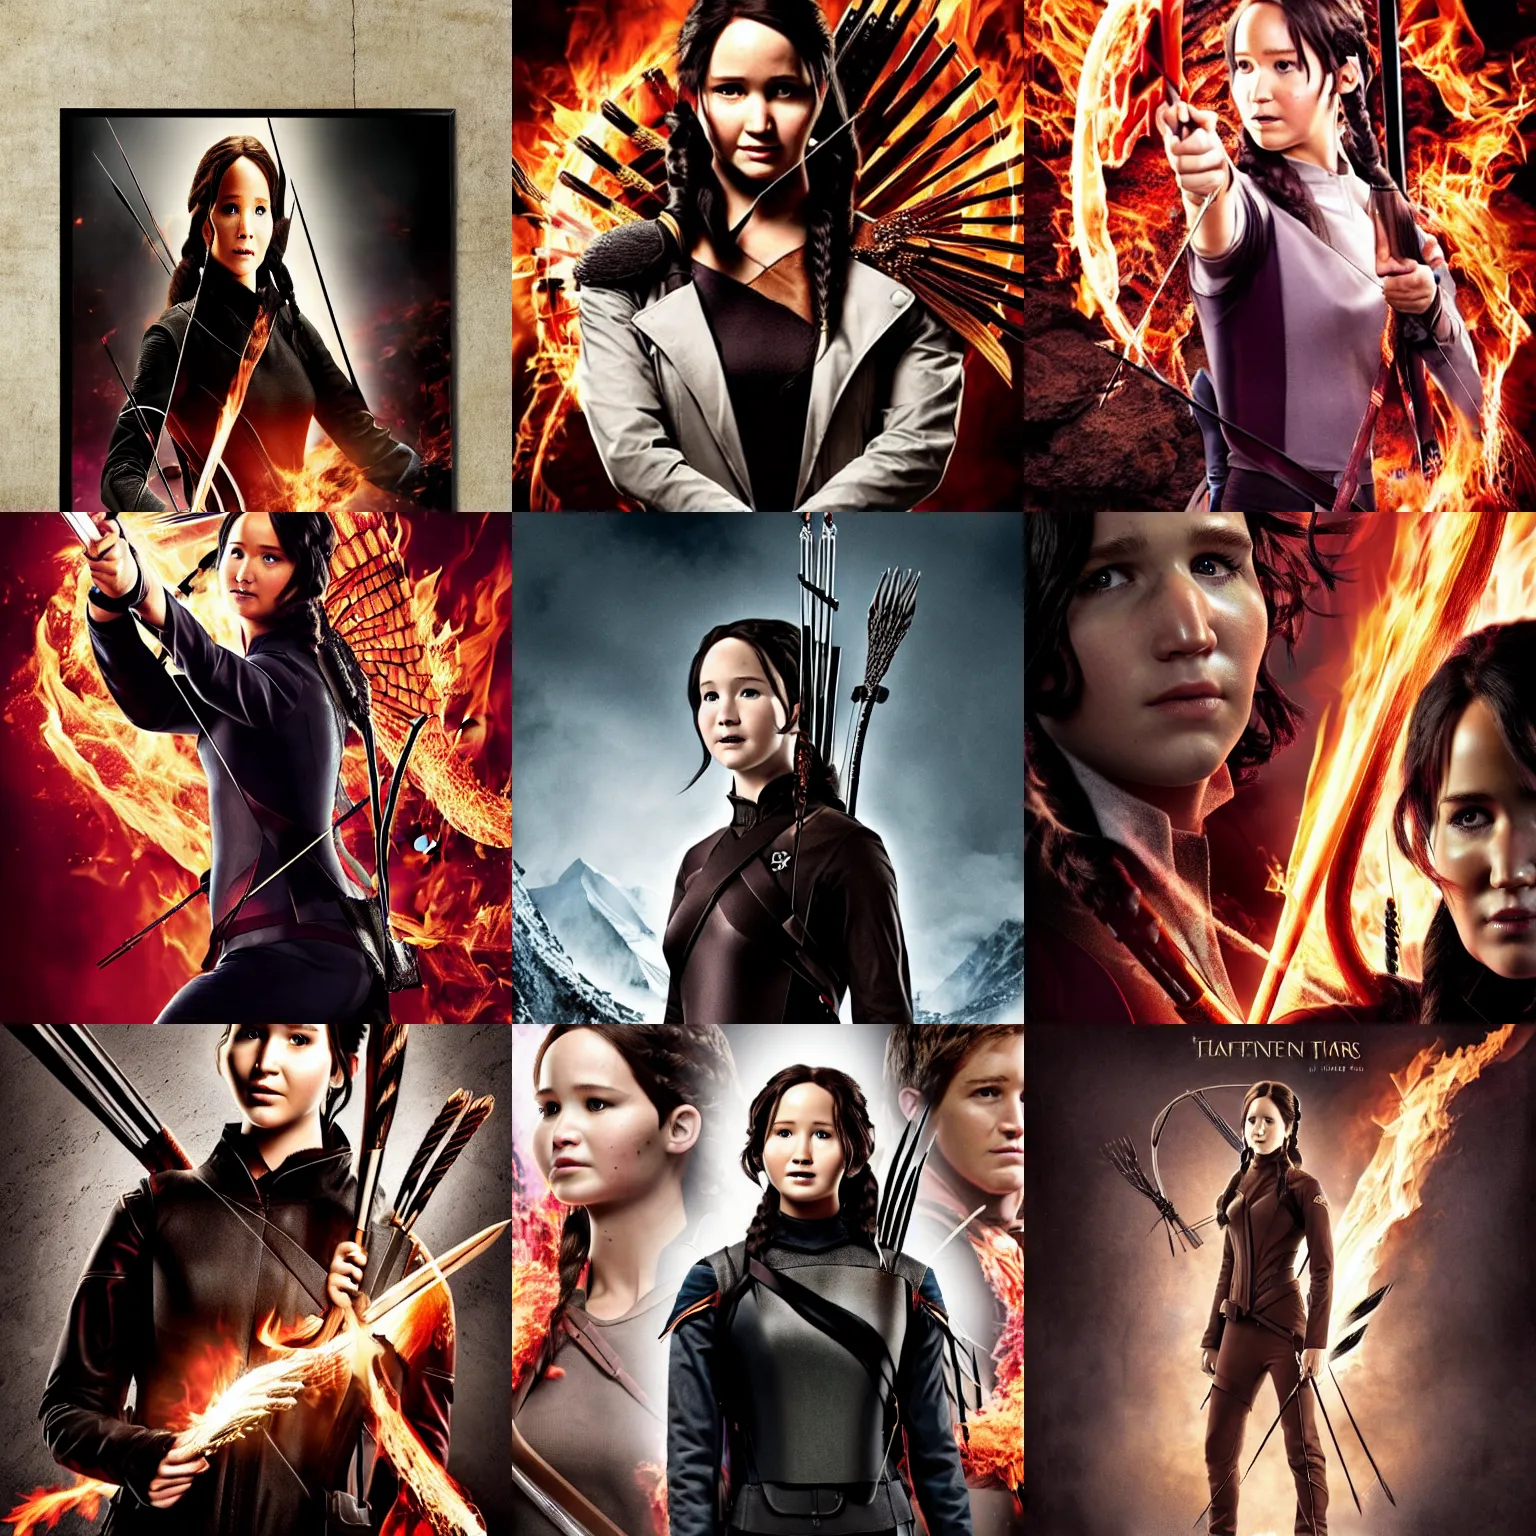 Prompt: katniss everdeen facing harry potter, fantasy movie poster